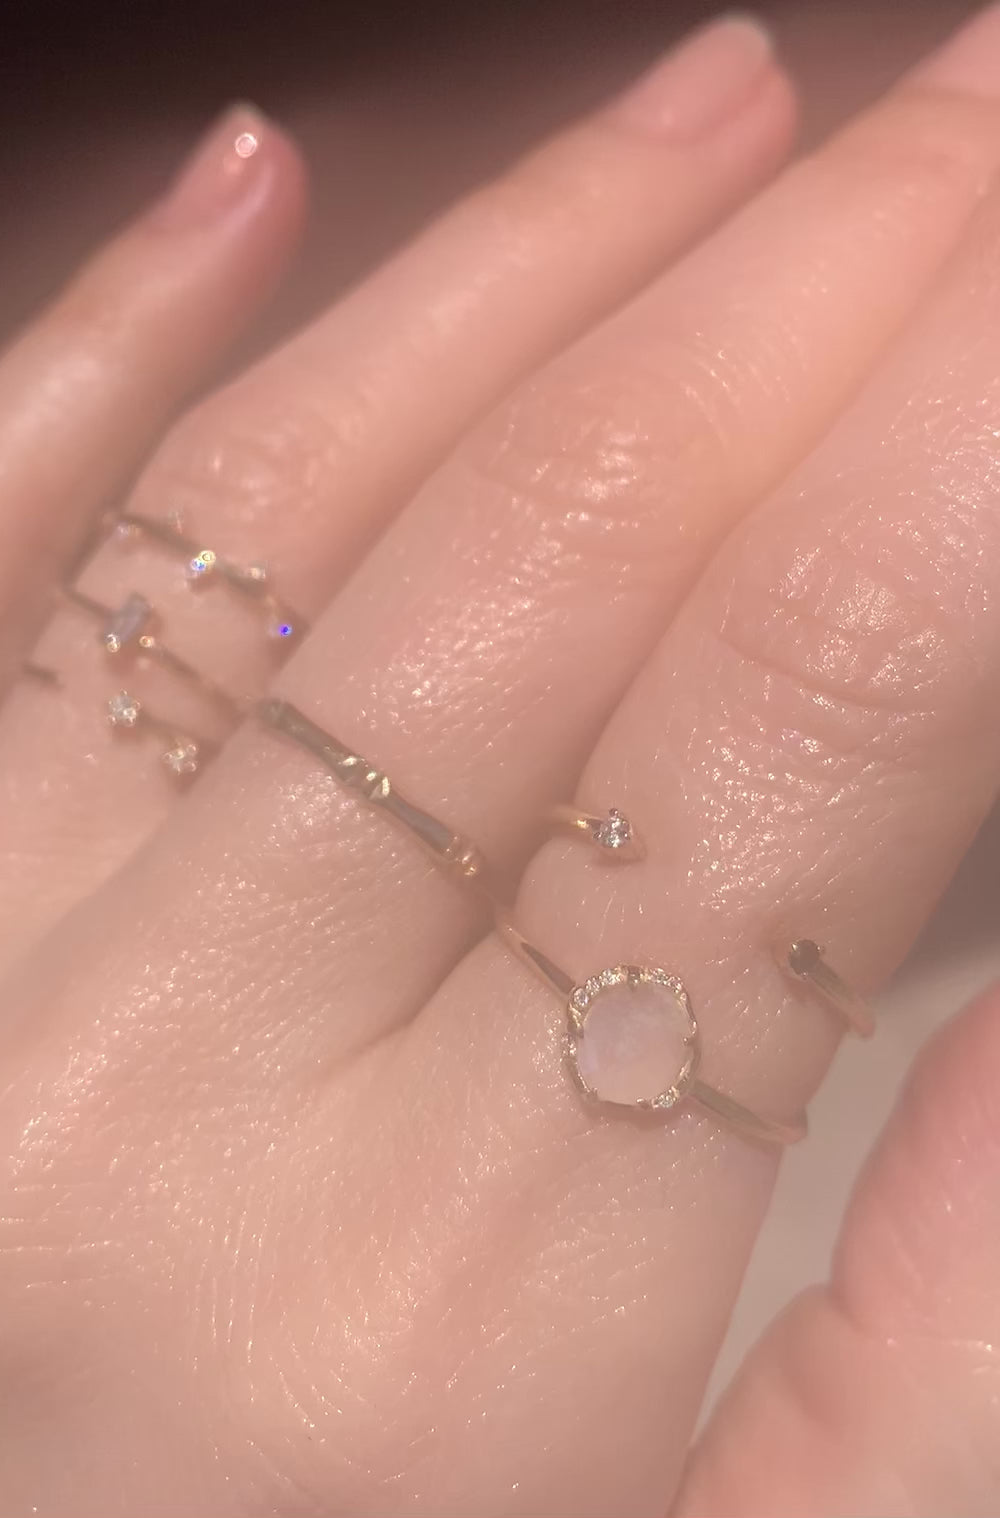 Baguette Diamond Solitaire Ring